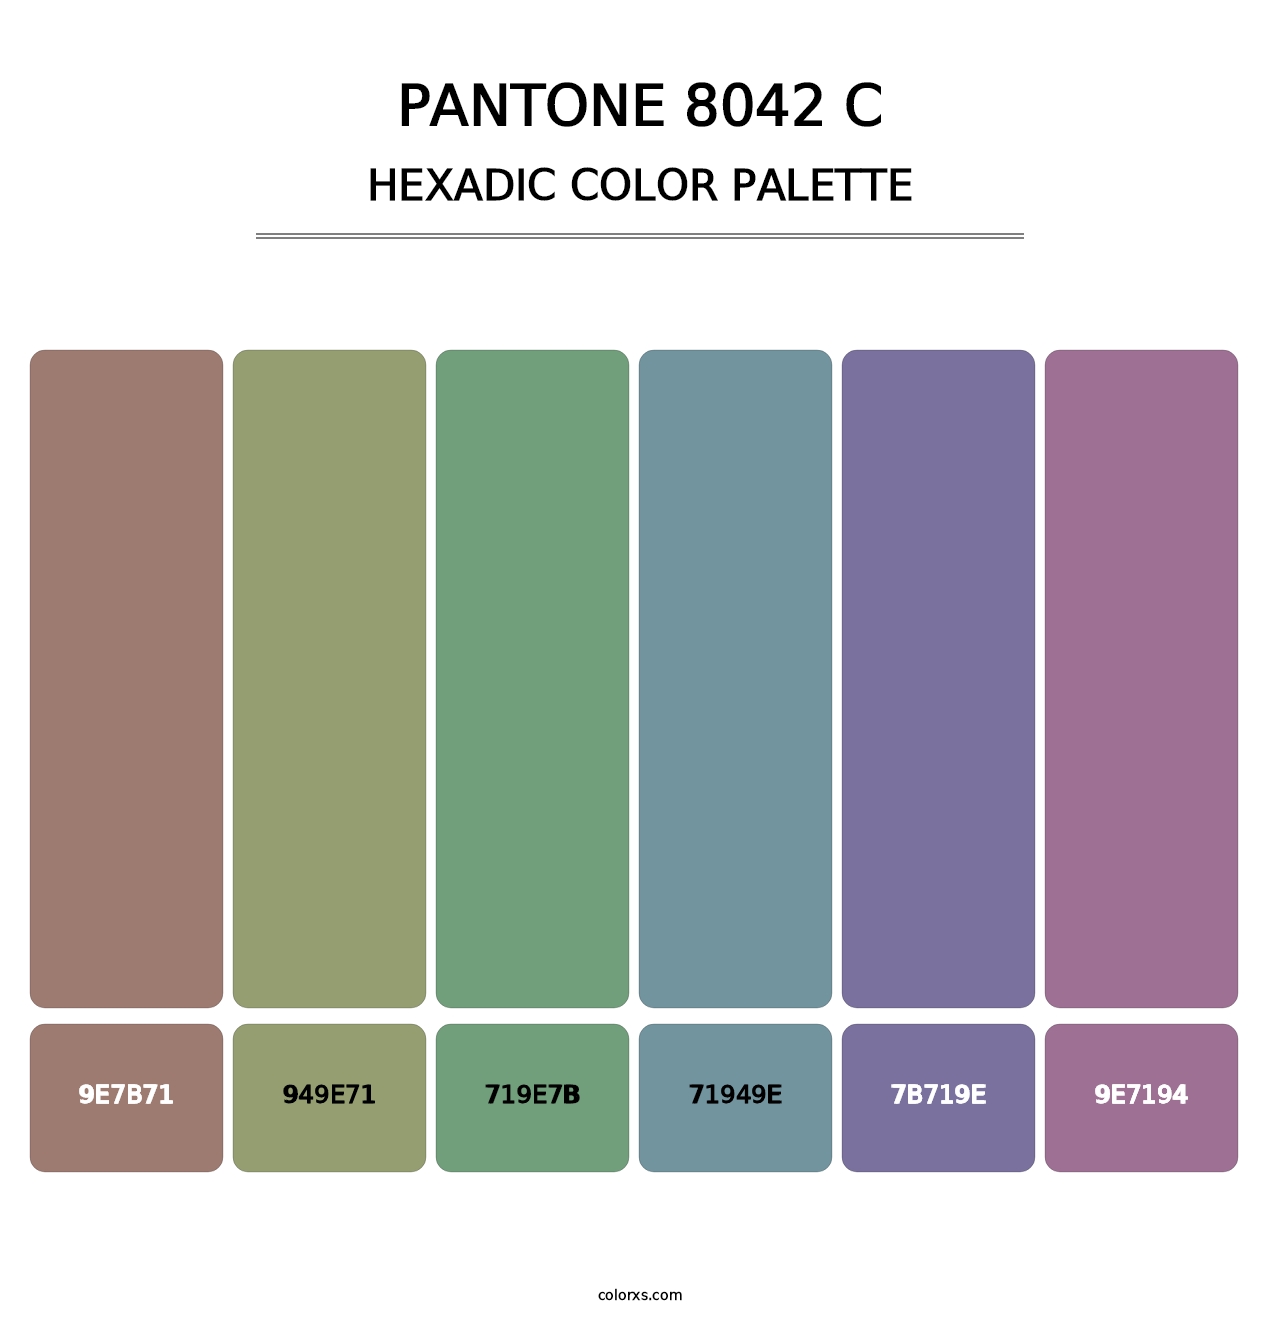 PANTONE 8042 C - Hexadic Color Palette